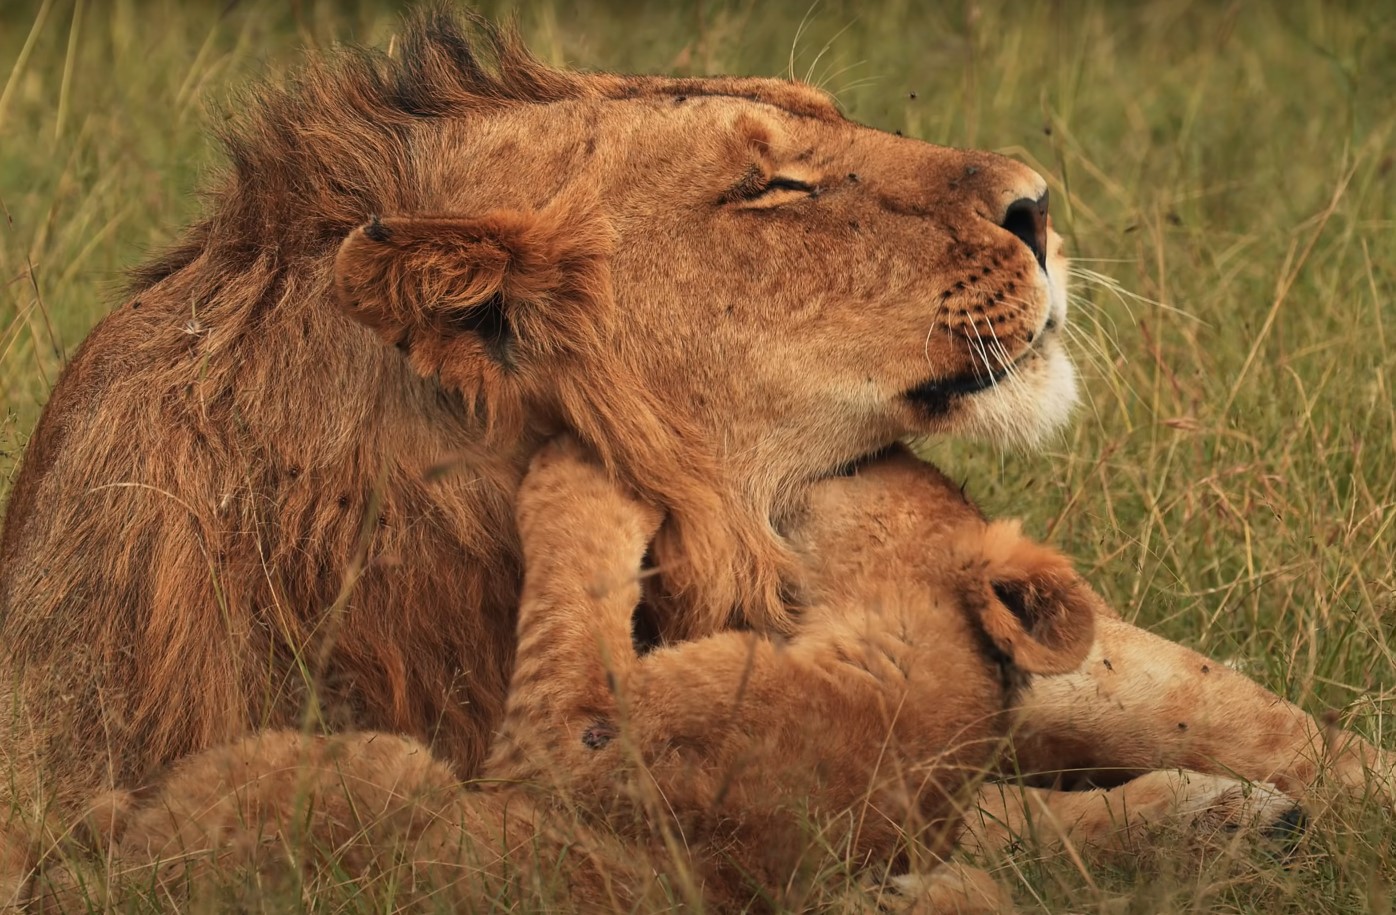 MasaiMara|Lion safaris